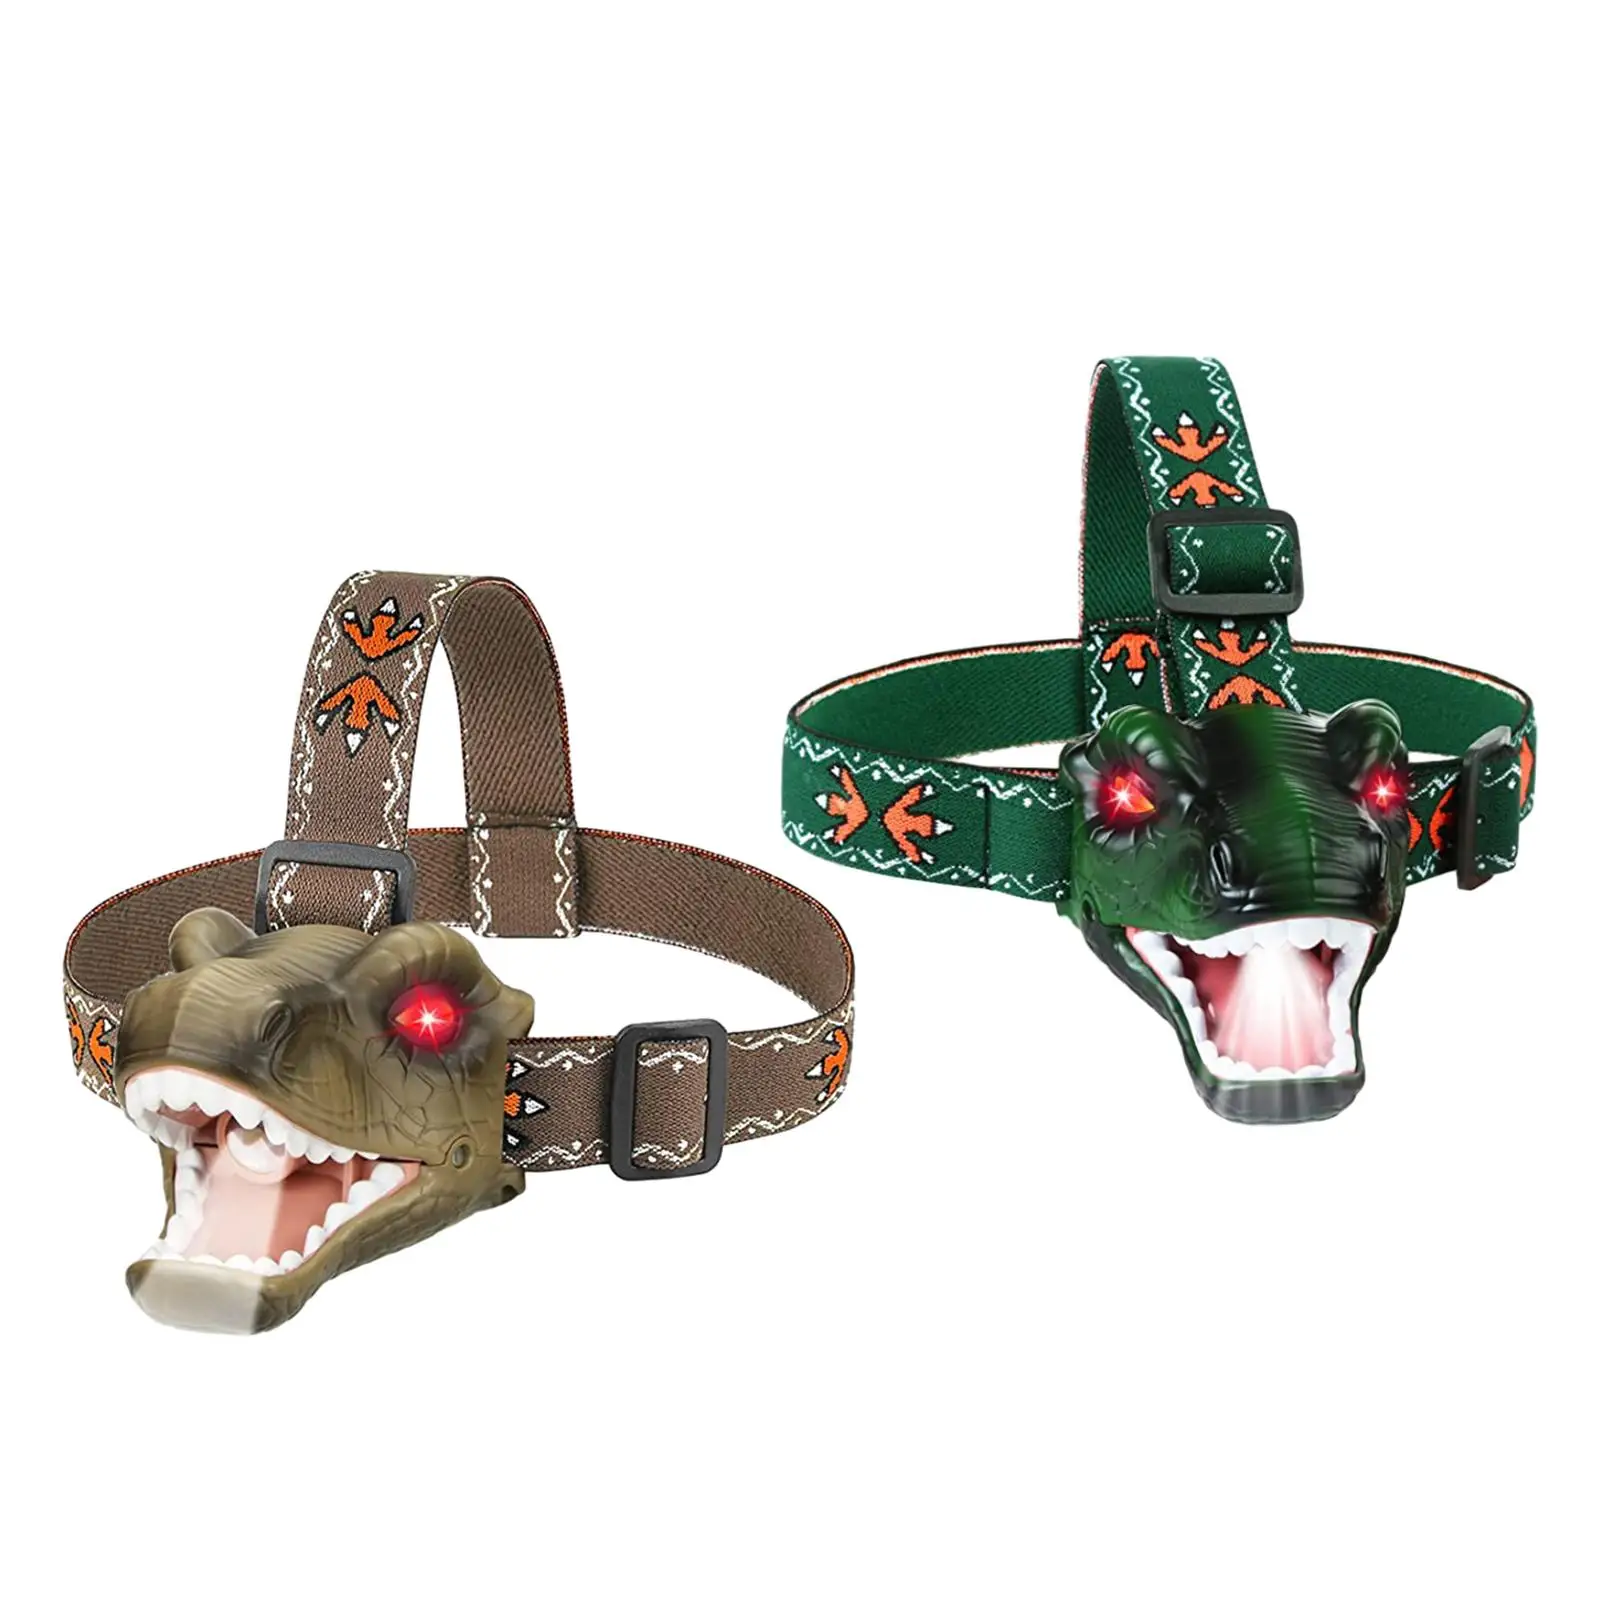 Headlamp Adjustable Lightweight Dinosaur Toys LED Headlight Outdoor Camping Gear for Camping Girls Boys Party Birthday Halloween